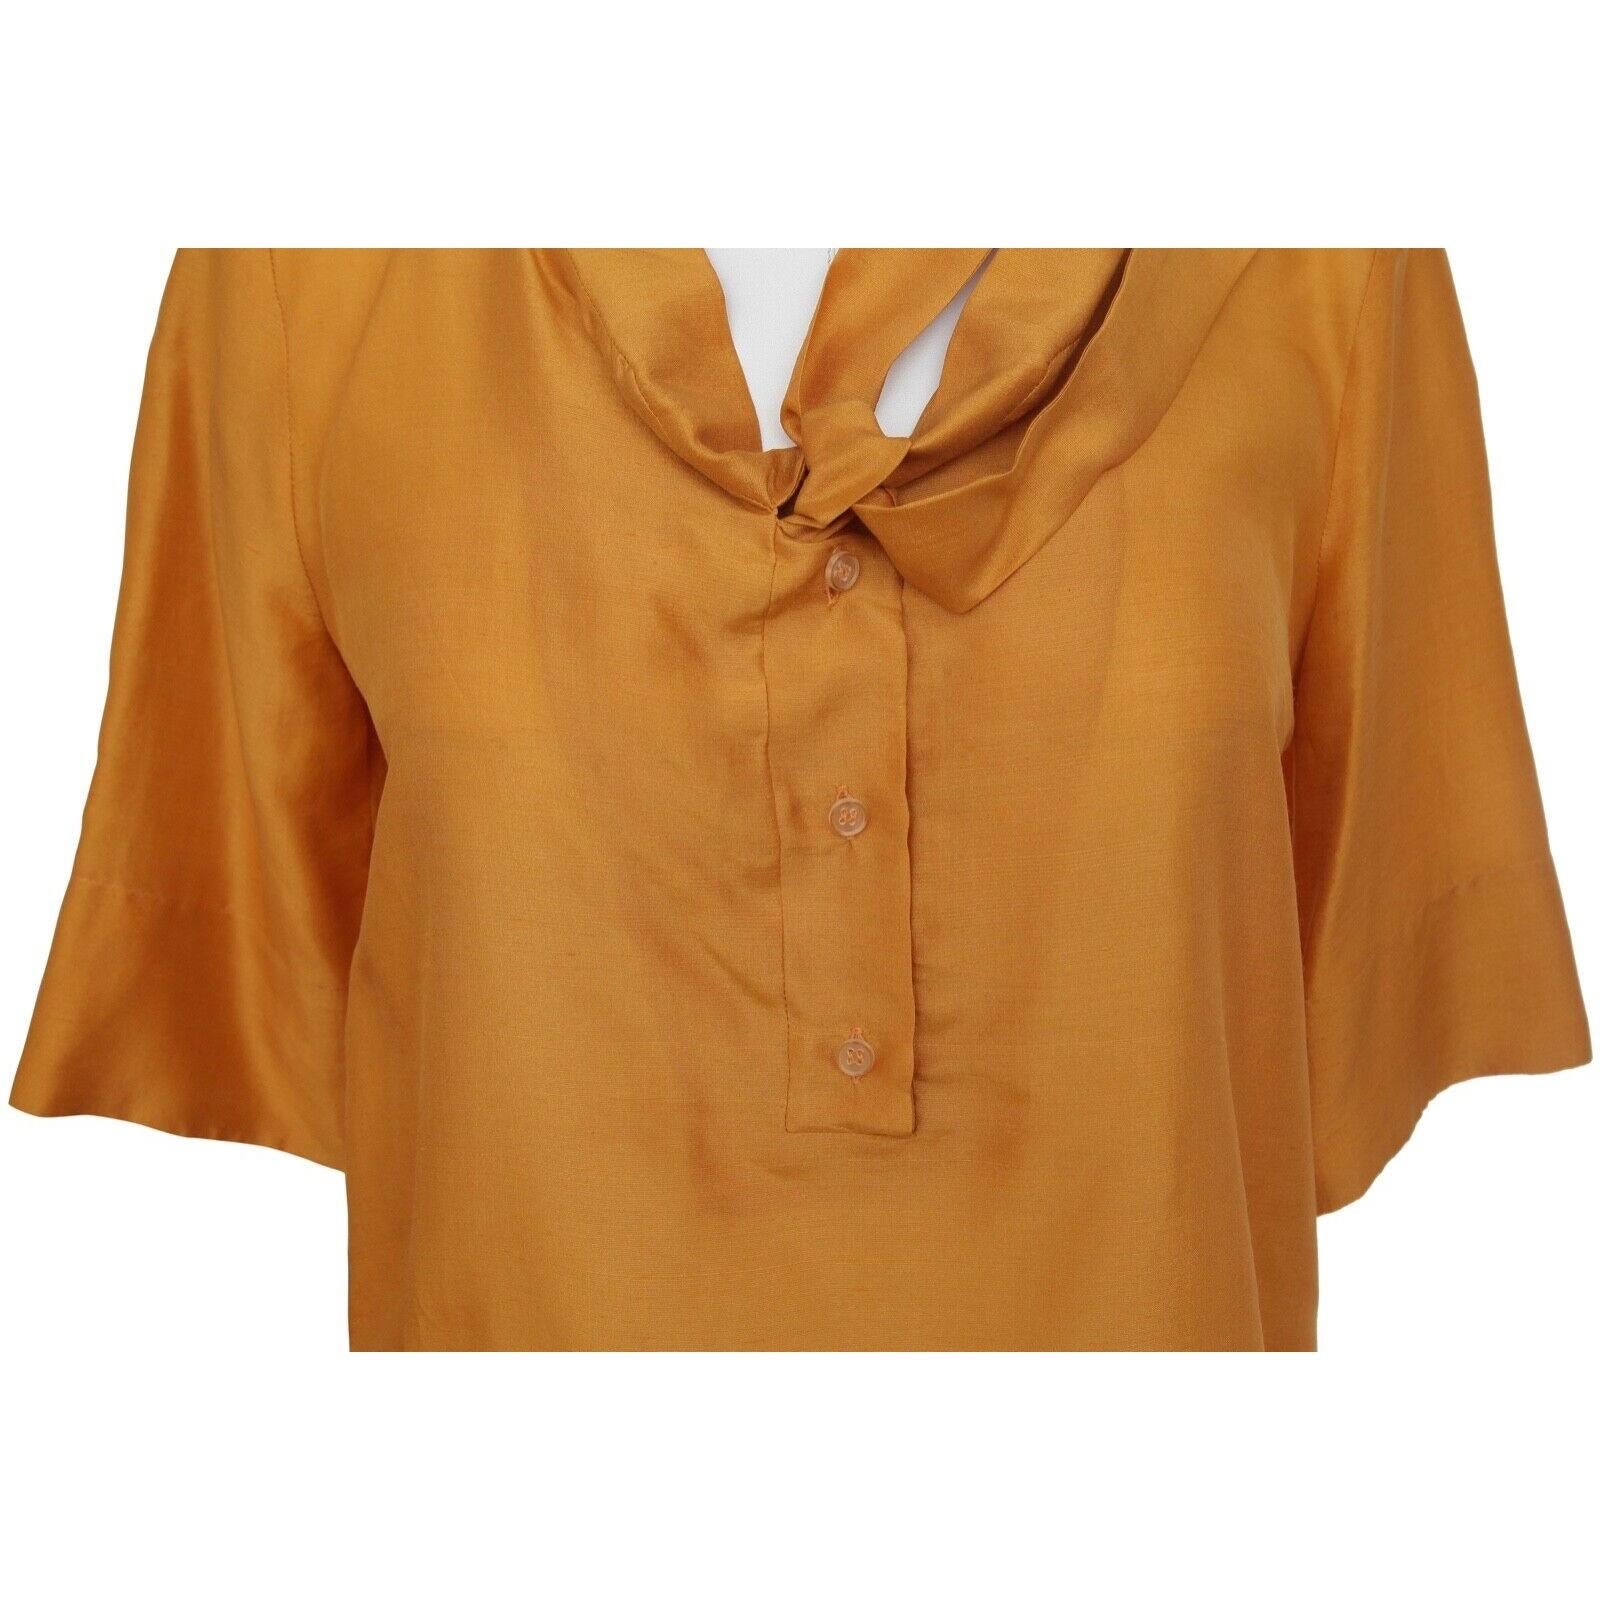 Women's CHLOE Blouse Shirt Marigold Yellow Orange Silk Short Sleeve Sz 36 Fall 2007 For Sale